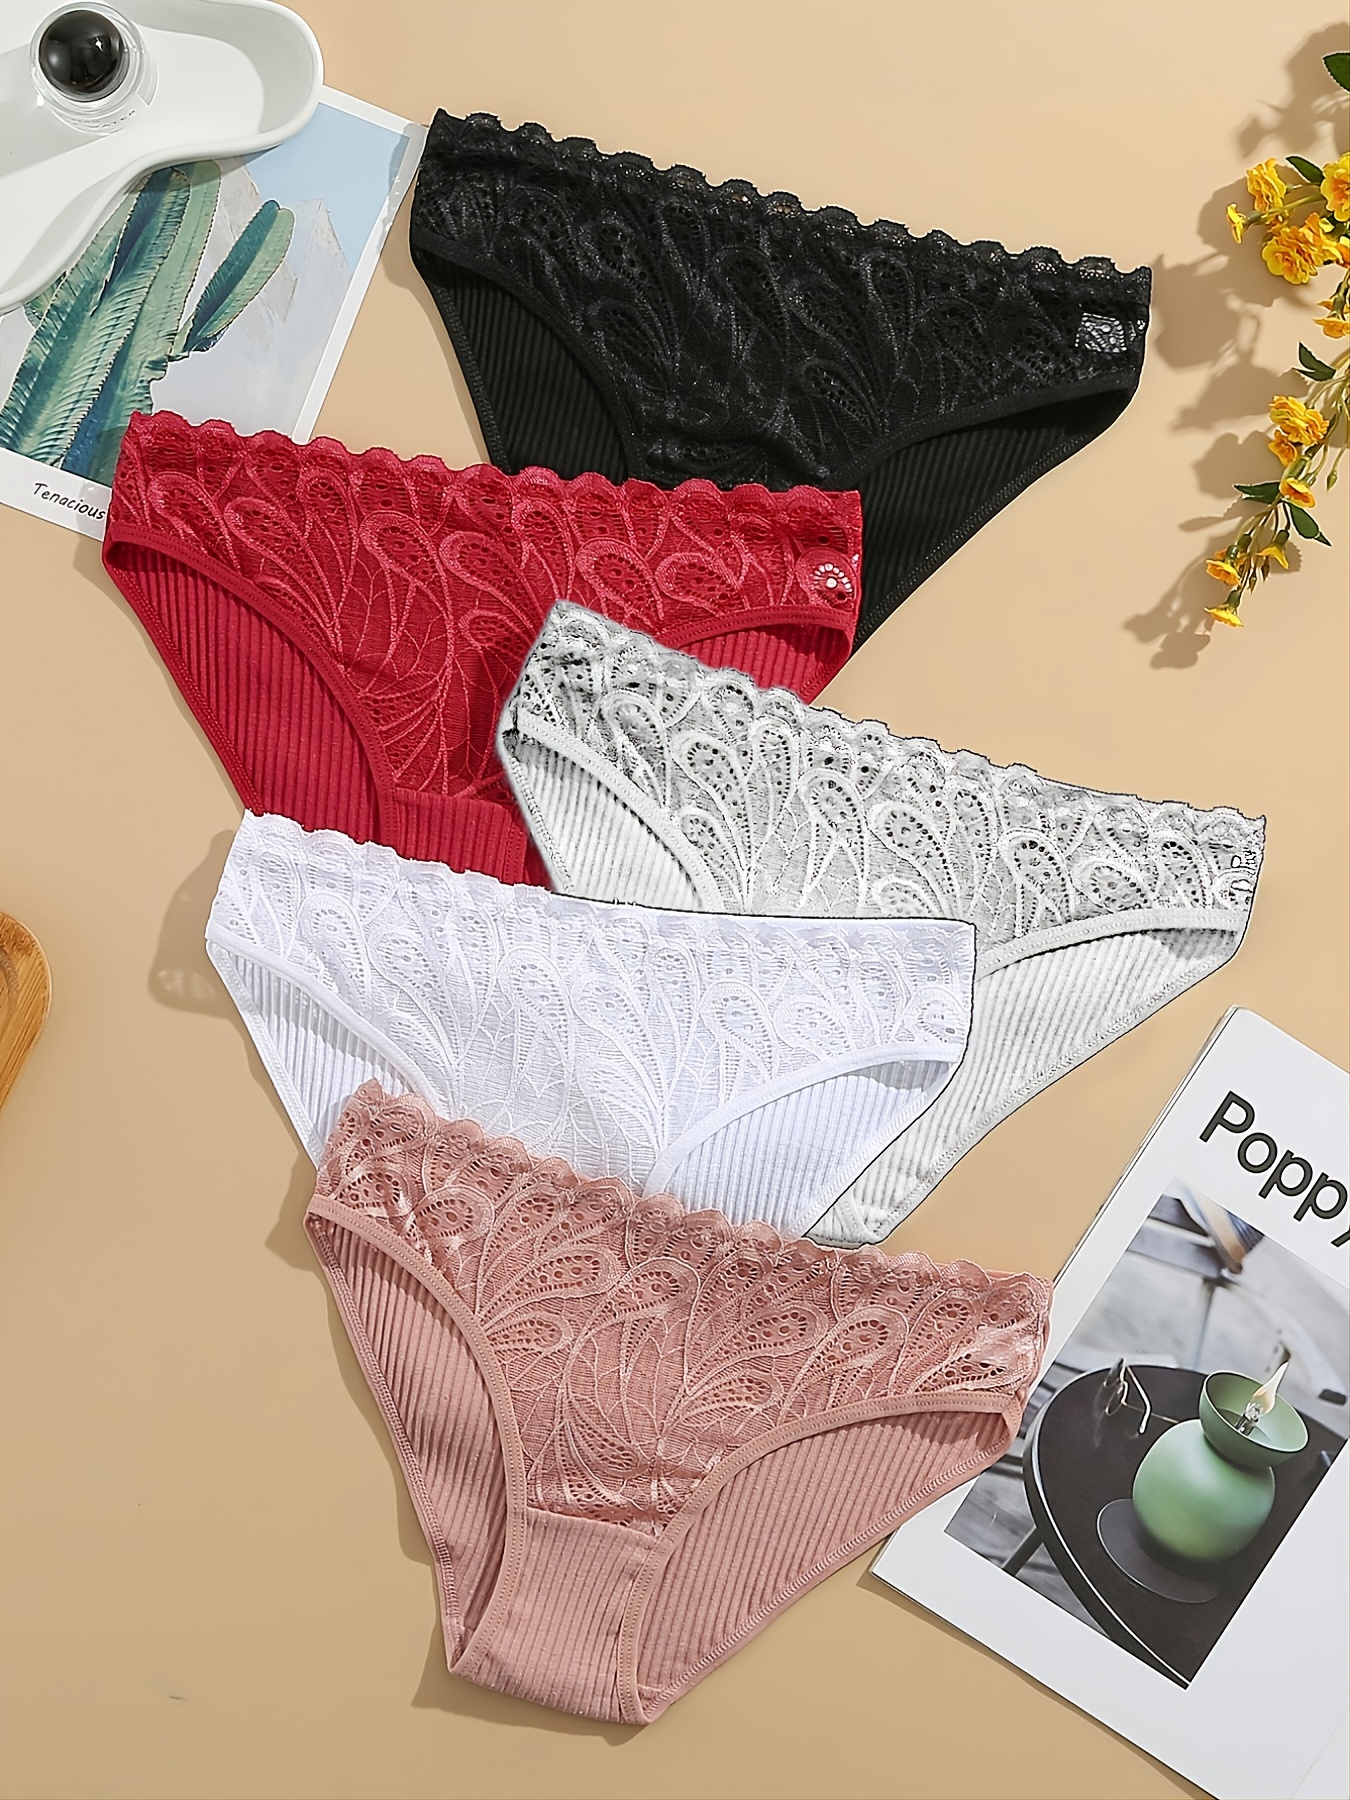 5pc Menstrual Period Underwear For Women Leak Proof Cotton Ladies Panties  Briefs Tw